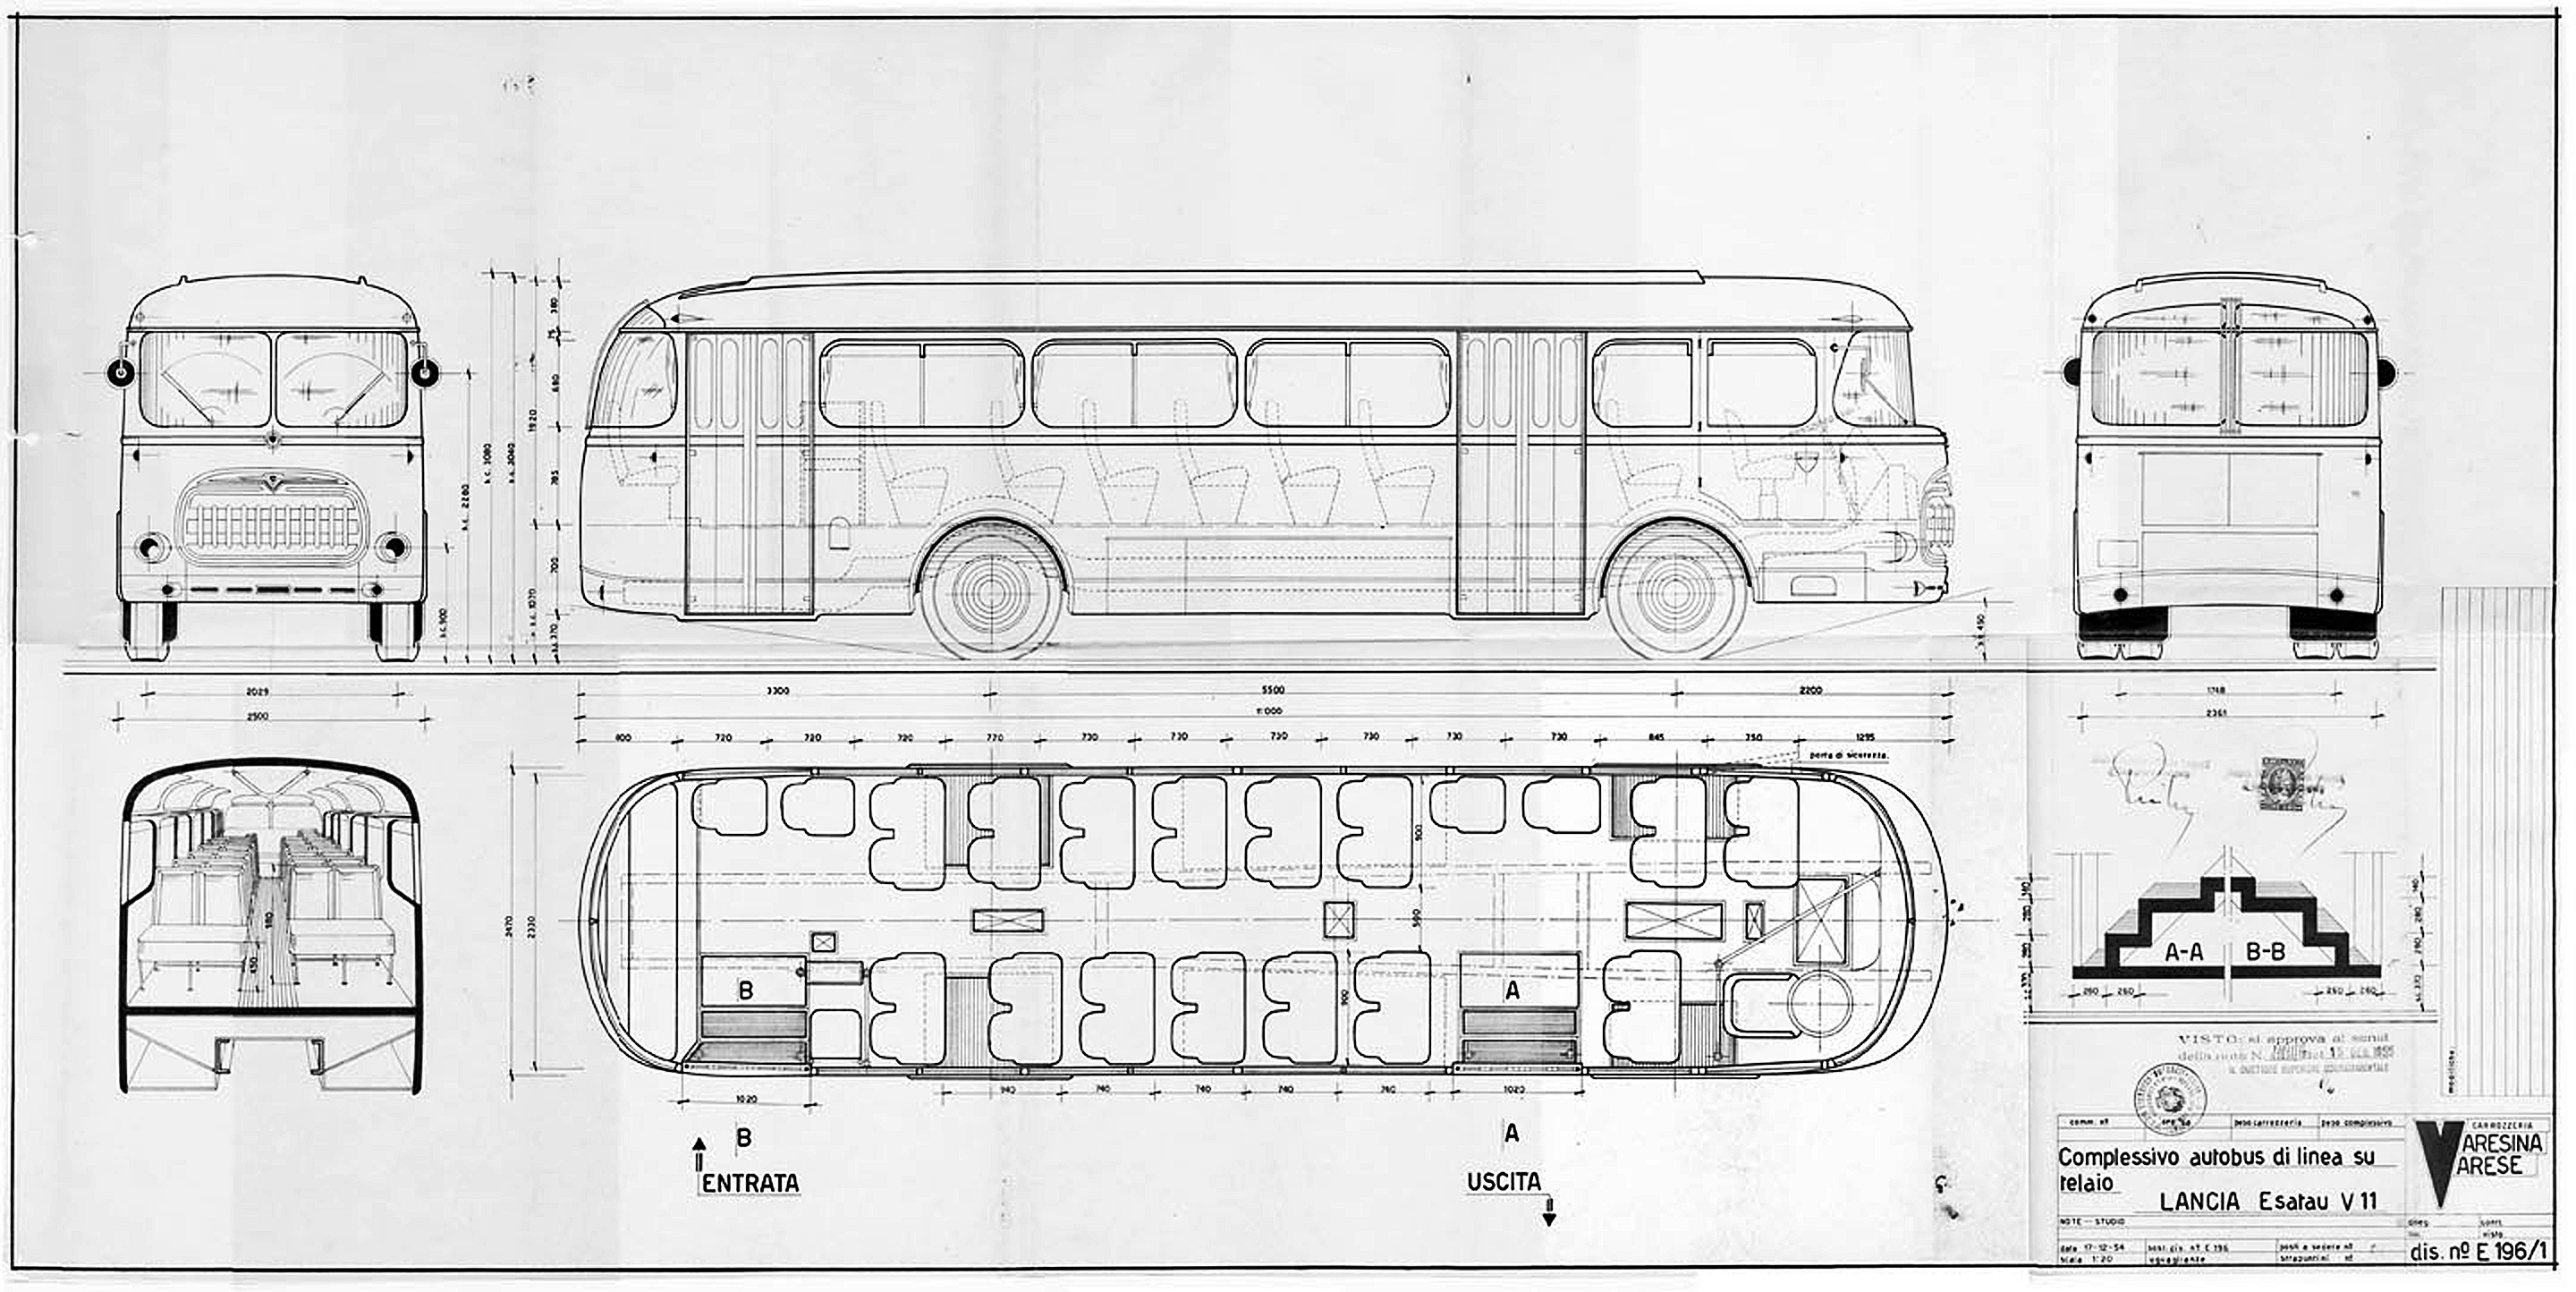 Lancia Esatau V11 Complessivo blueprint